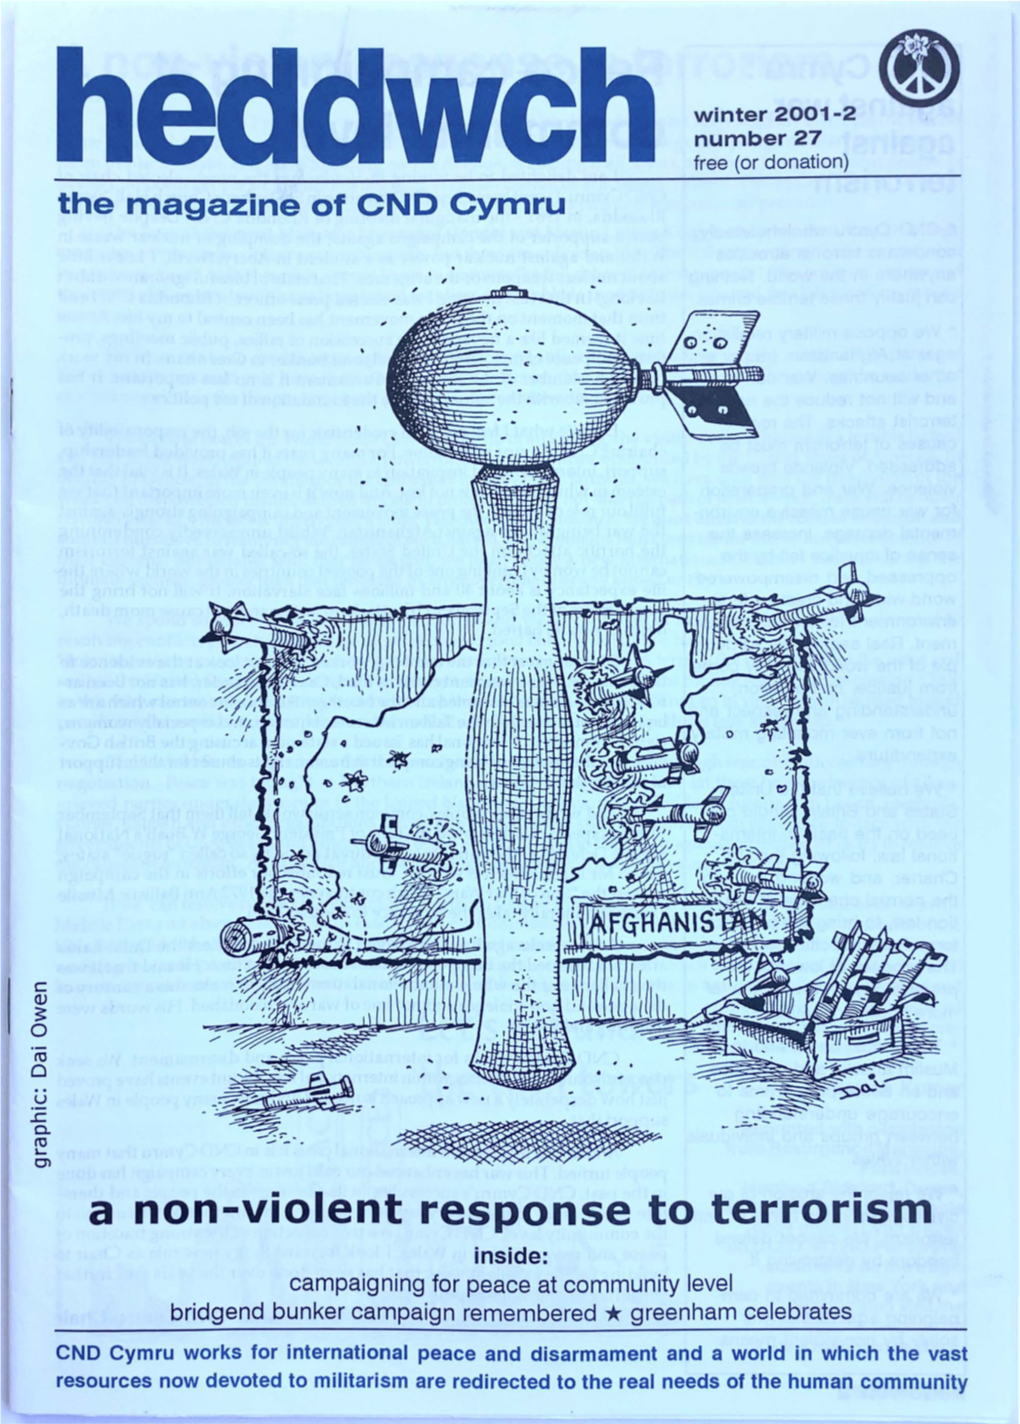 A Non-Violent Response to Terrorism